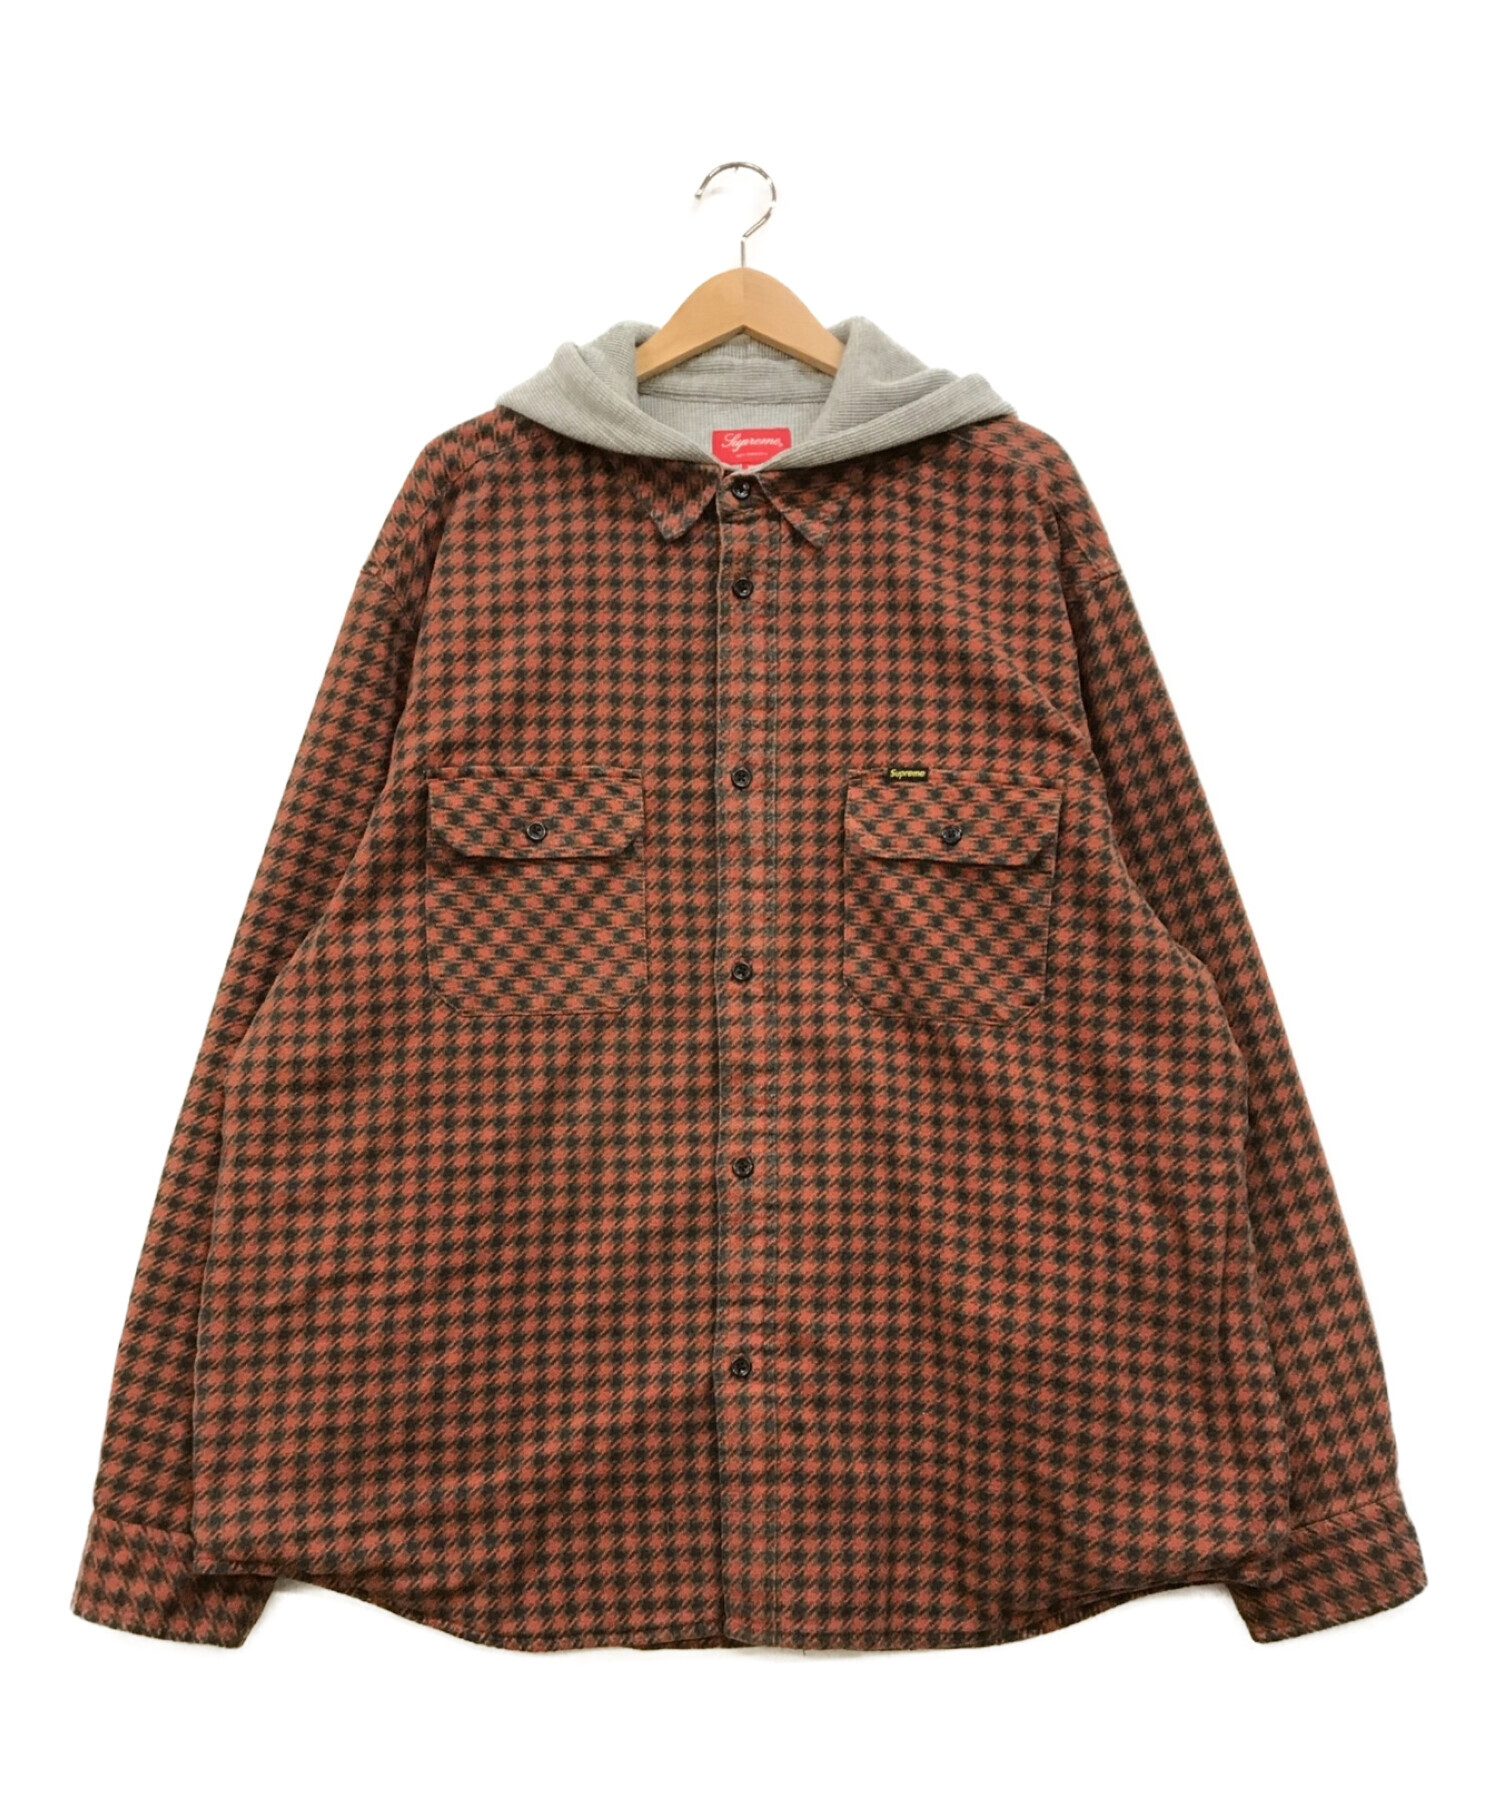 SUPREME (シュプリーム) 22AW Houndstooth Flannel Hooded Shirt オレンジ×グレー サイズ:XL